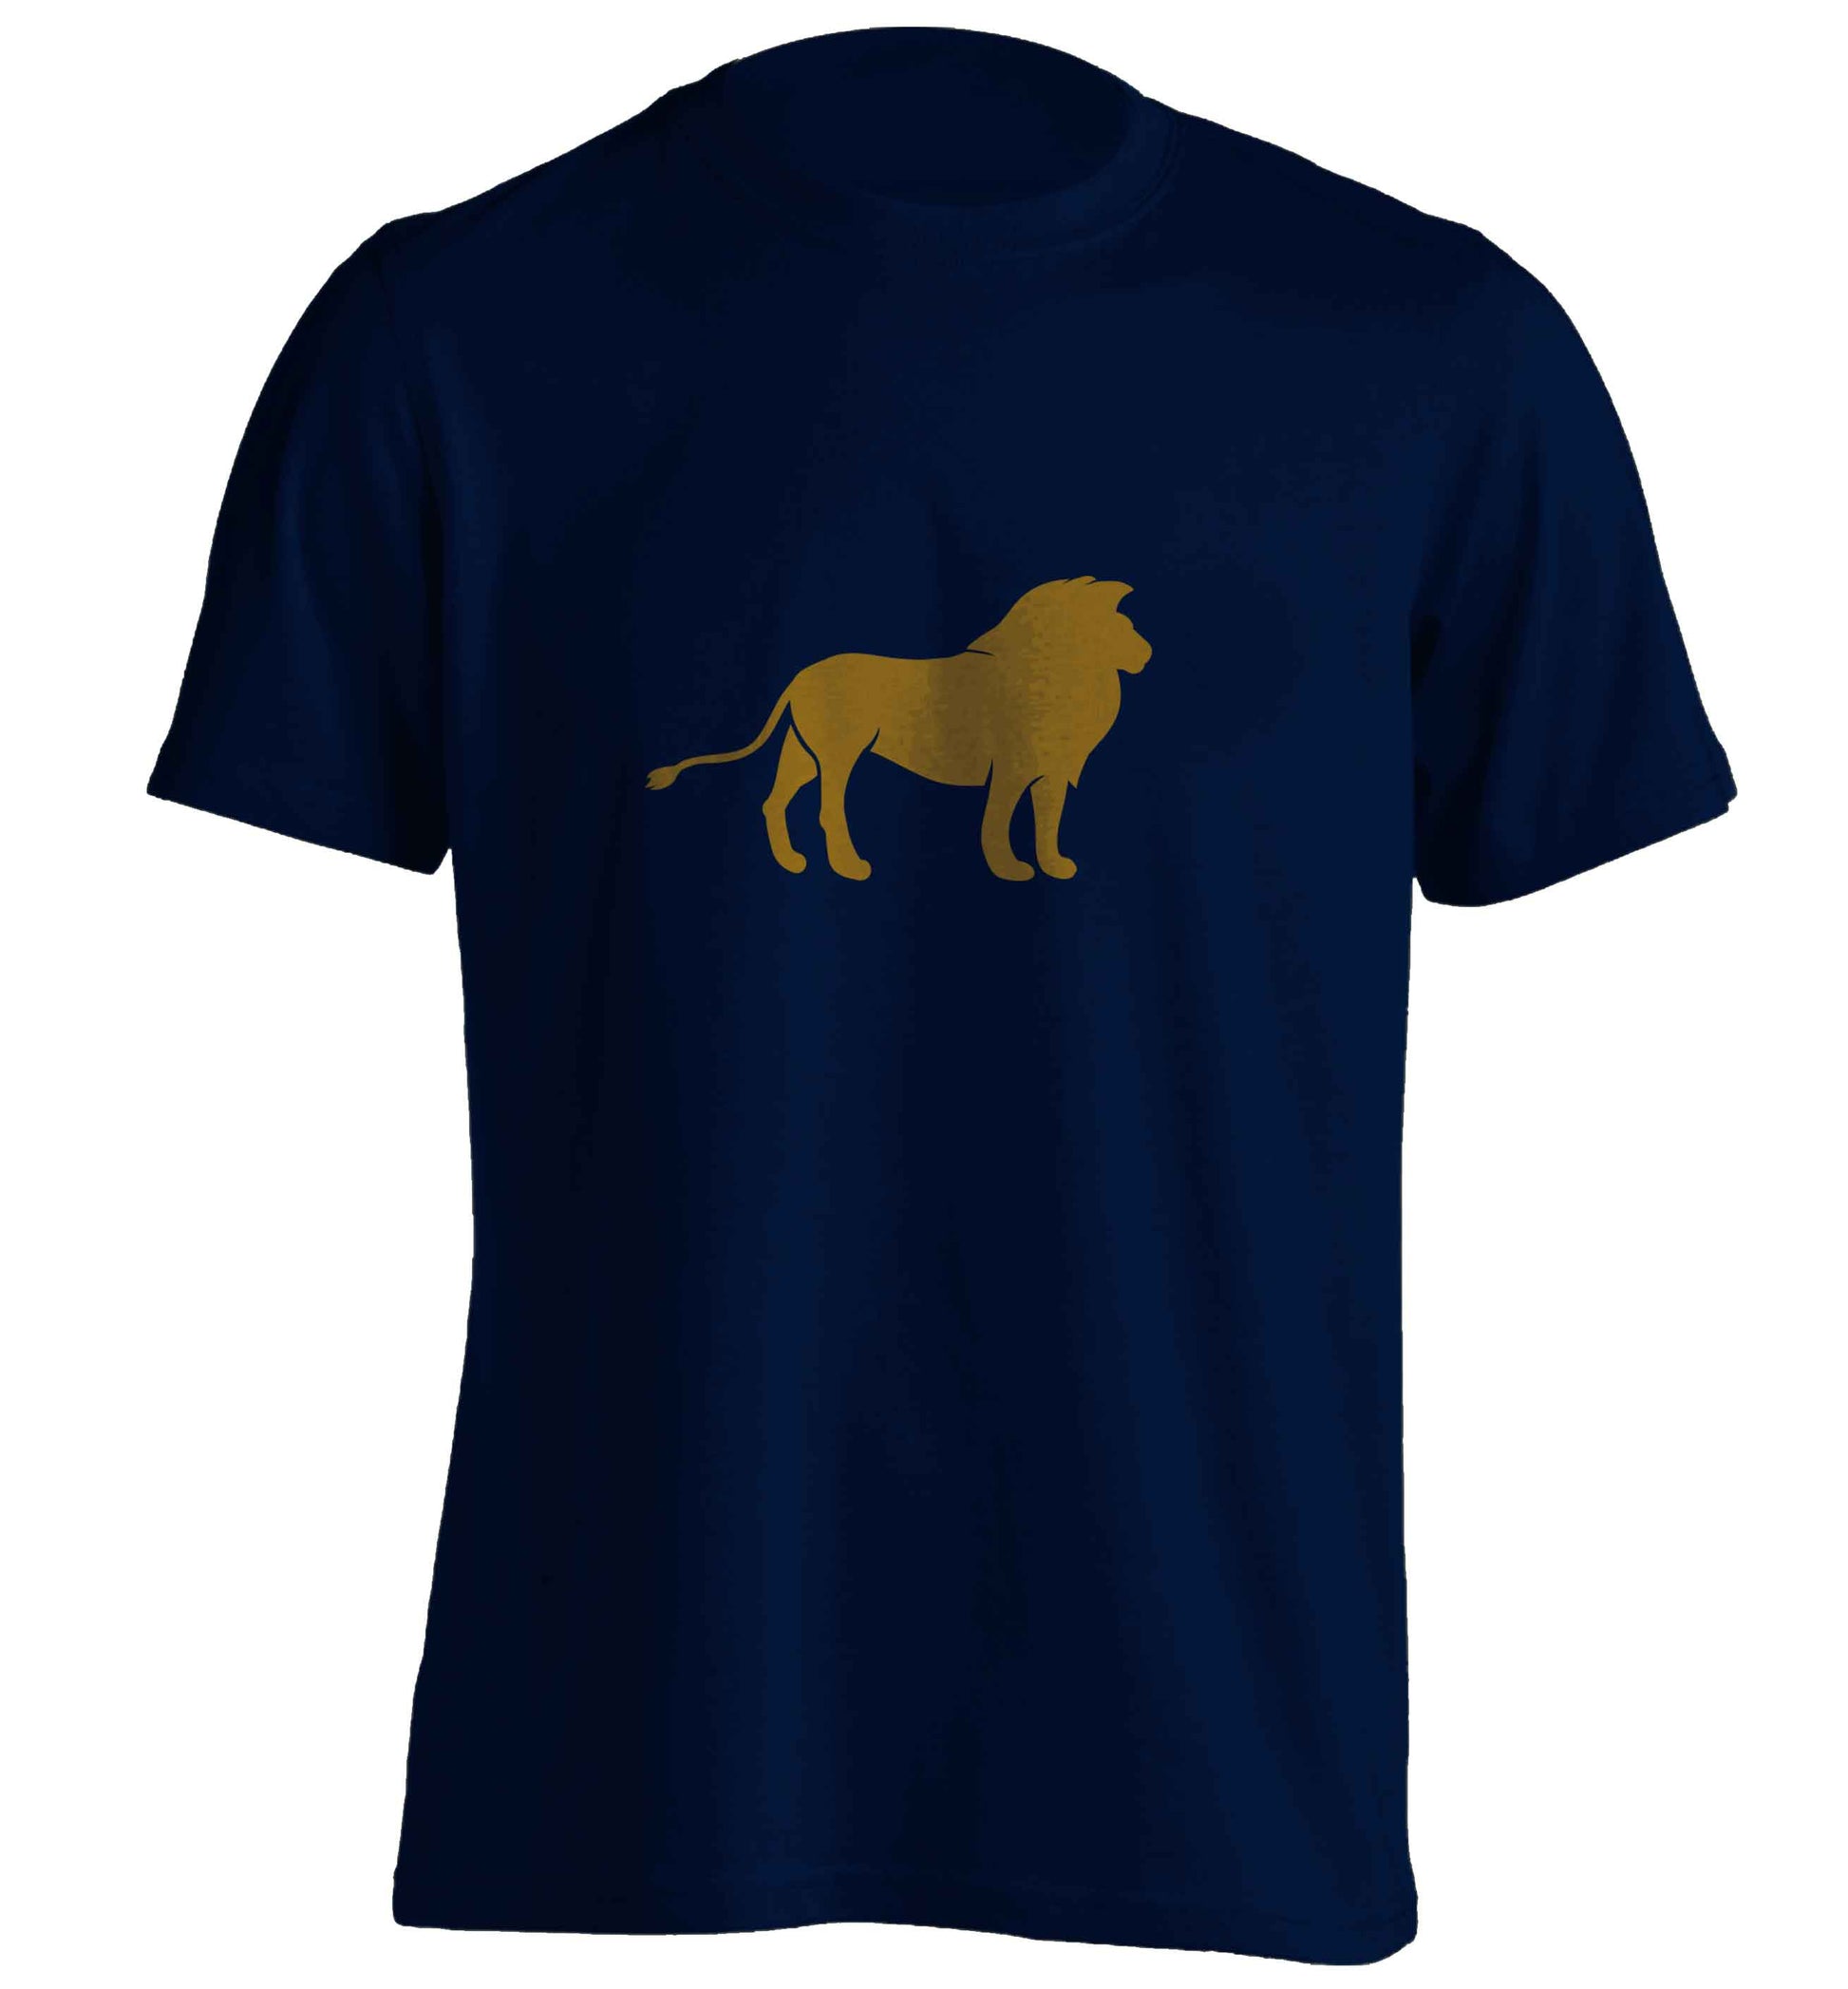 Gold lion adults unisex navy Tshirt 2XL